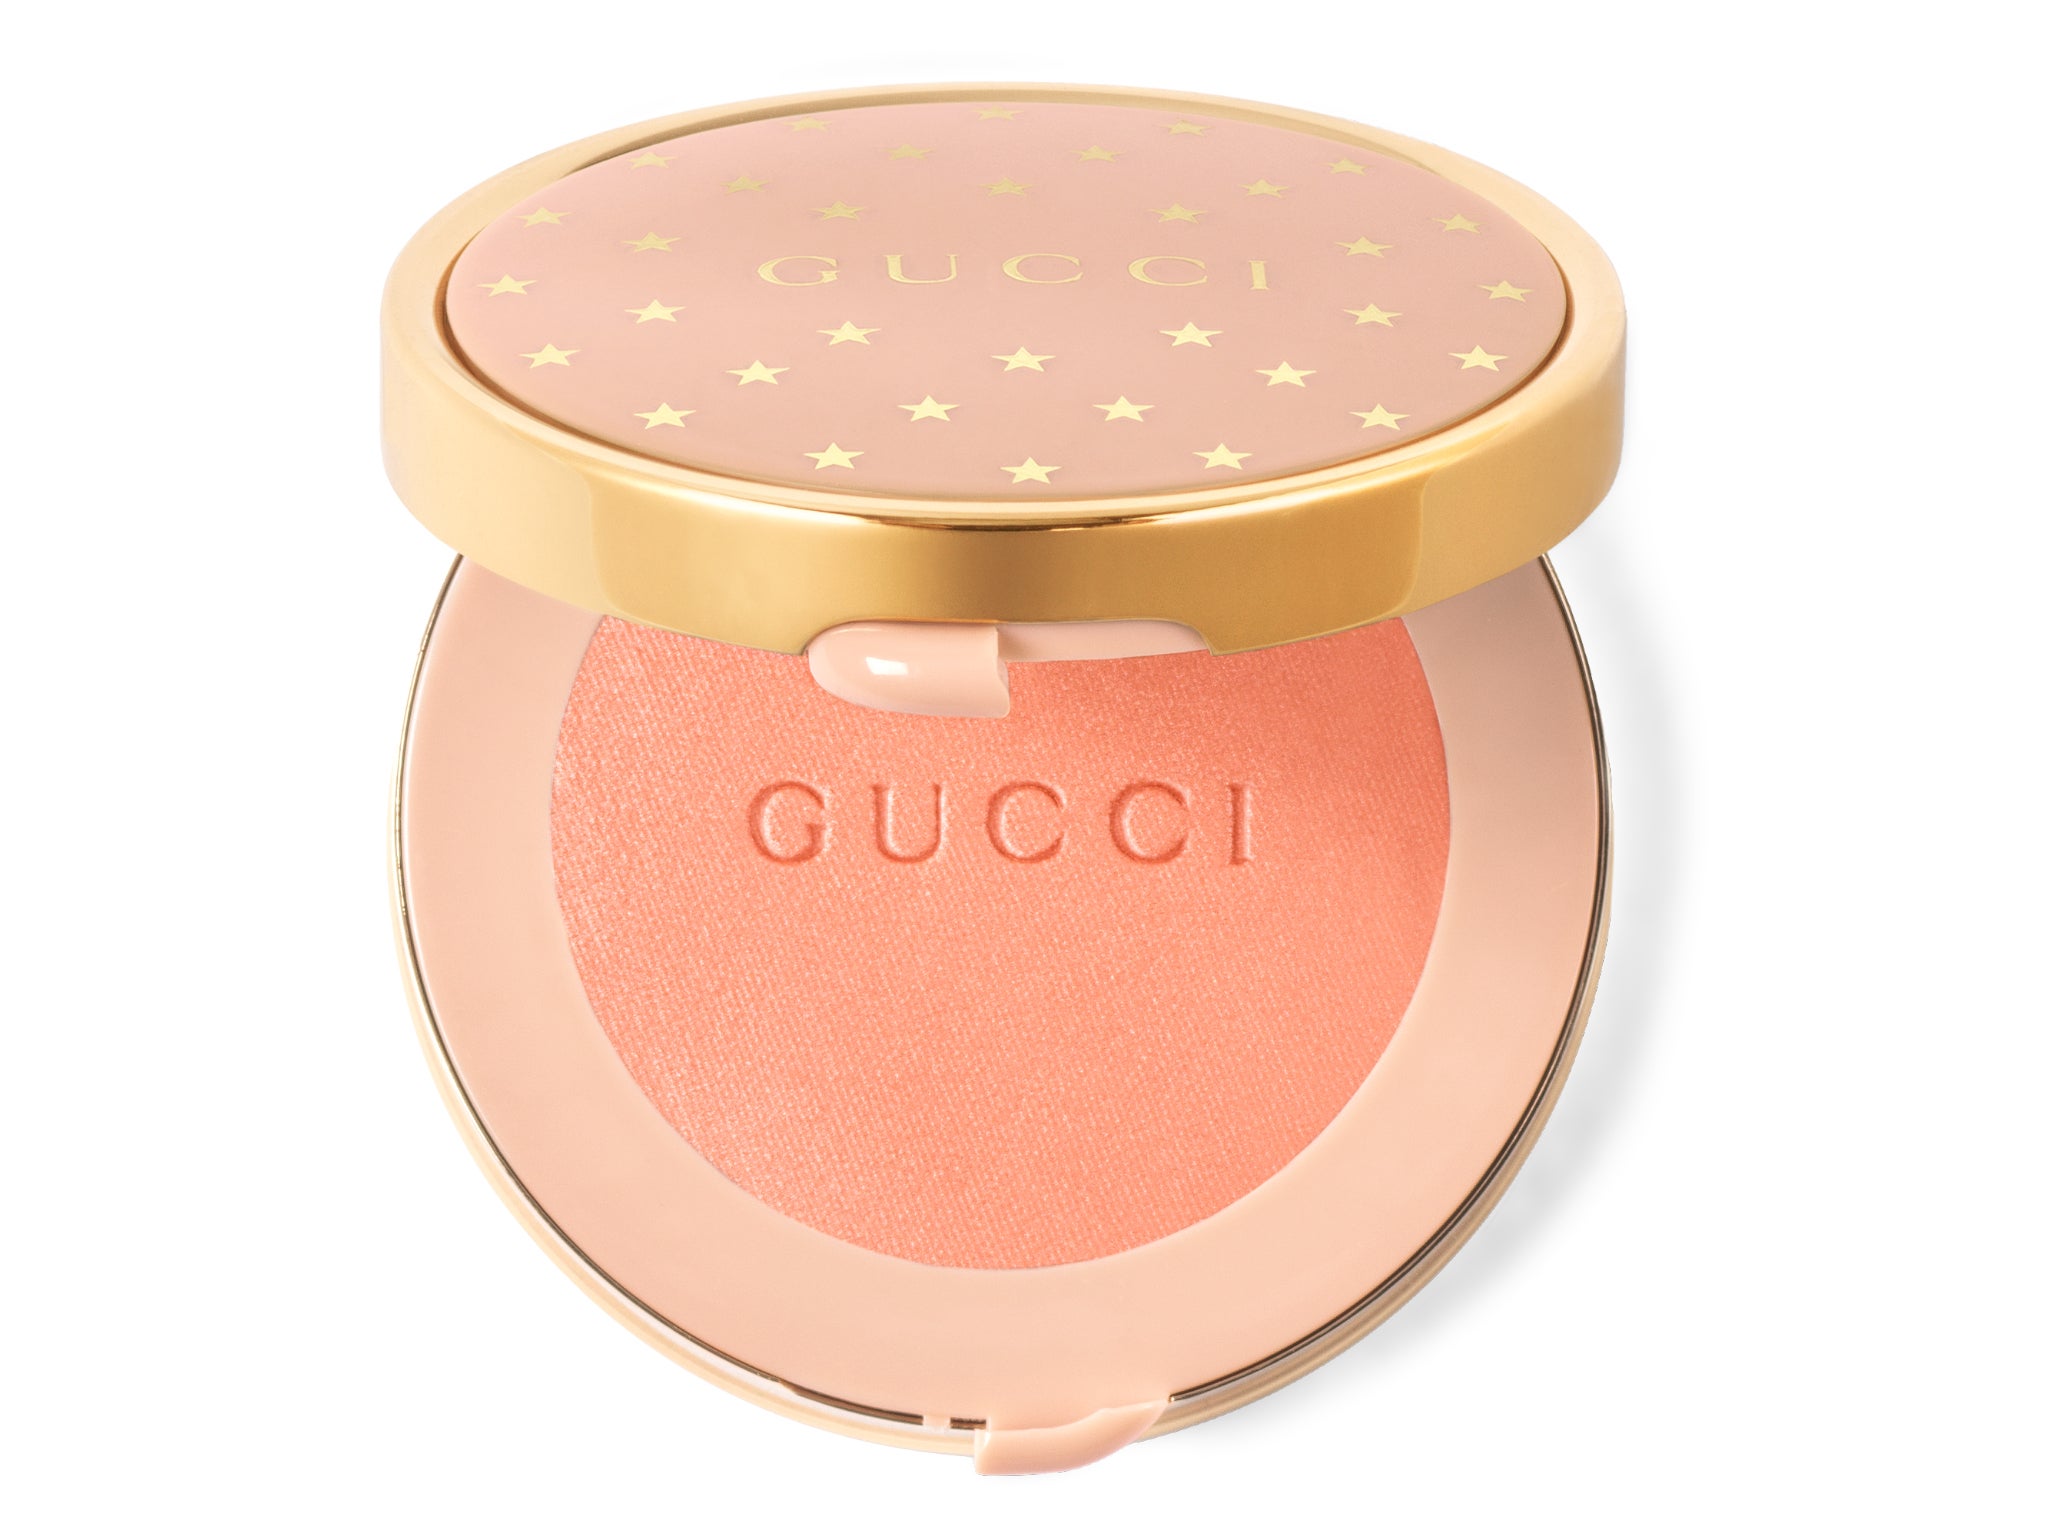 Gucci Beauty powder blush.jpg